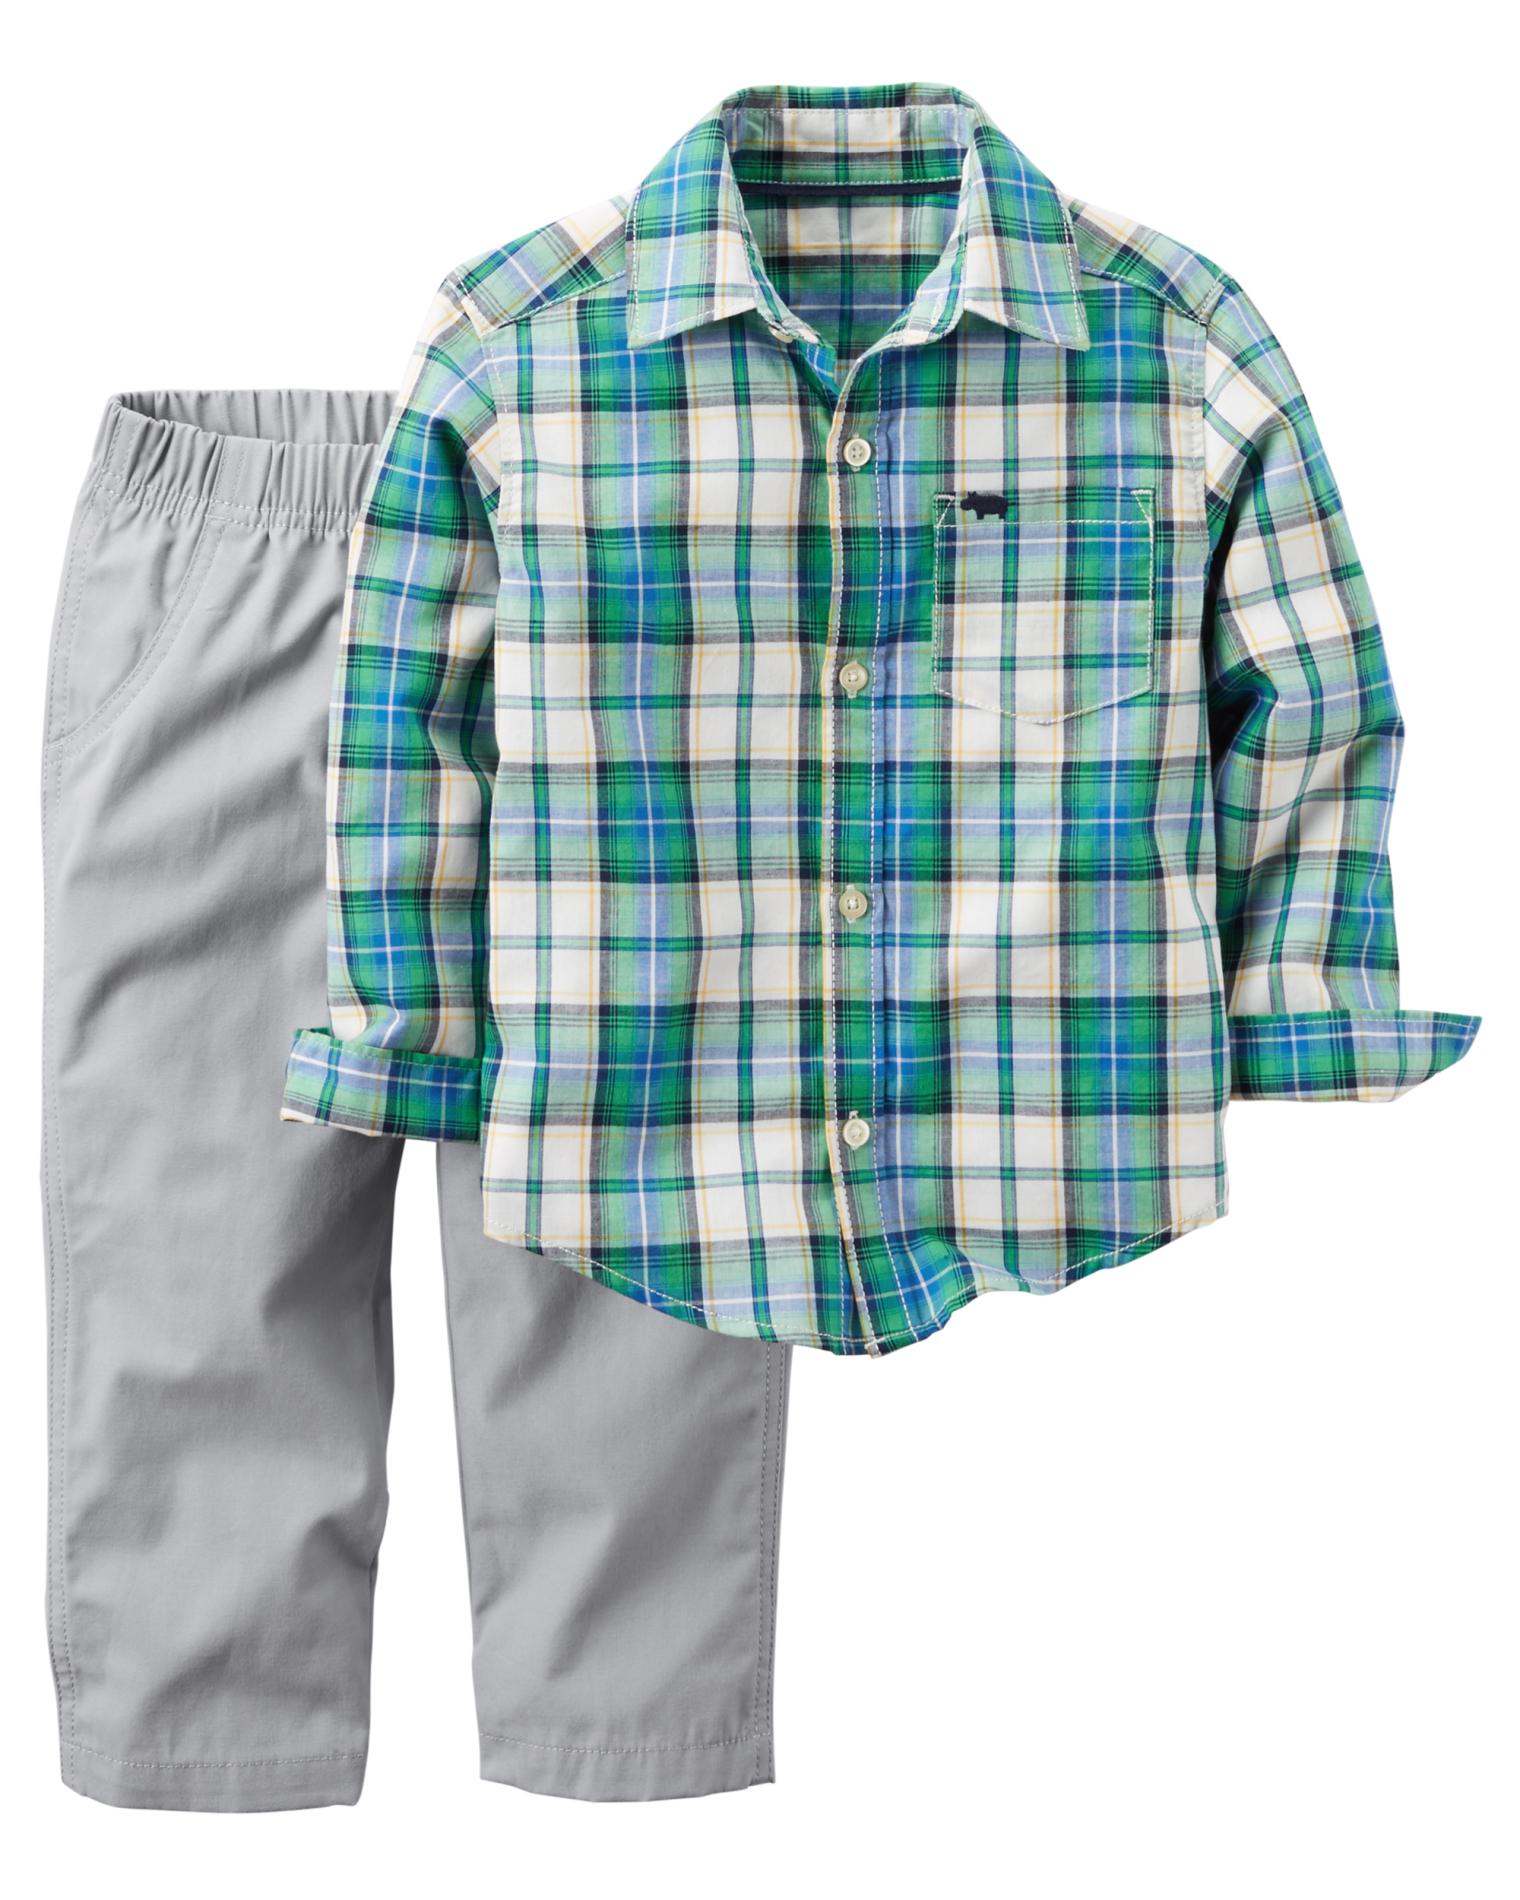 Carter's Newborn, Infant & Toddler Boys' Button-Front Shirt & Pants - Plaid